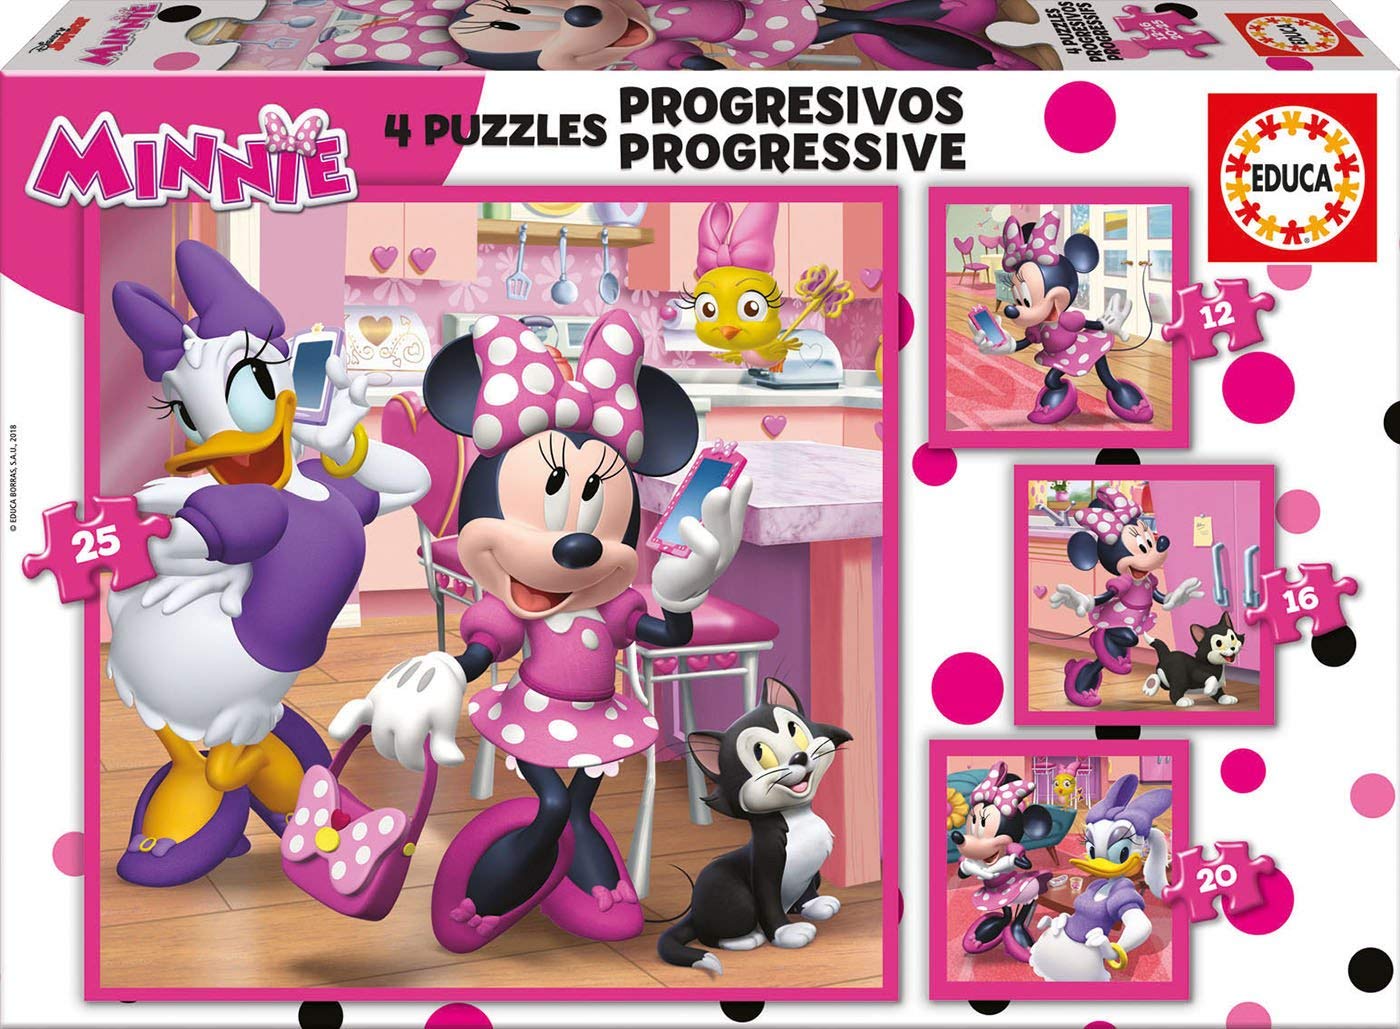 4 Puzzles - Minnie Educa-17630 12 pieces Jigsaw Puzzles - Mickey